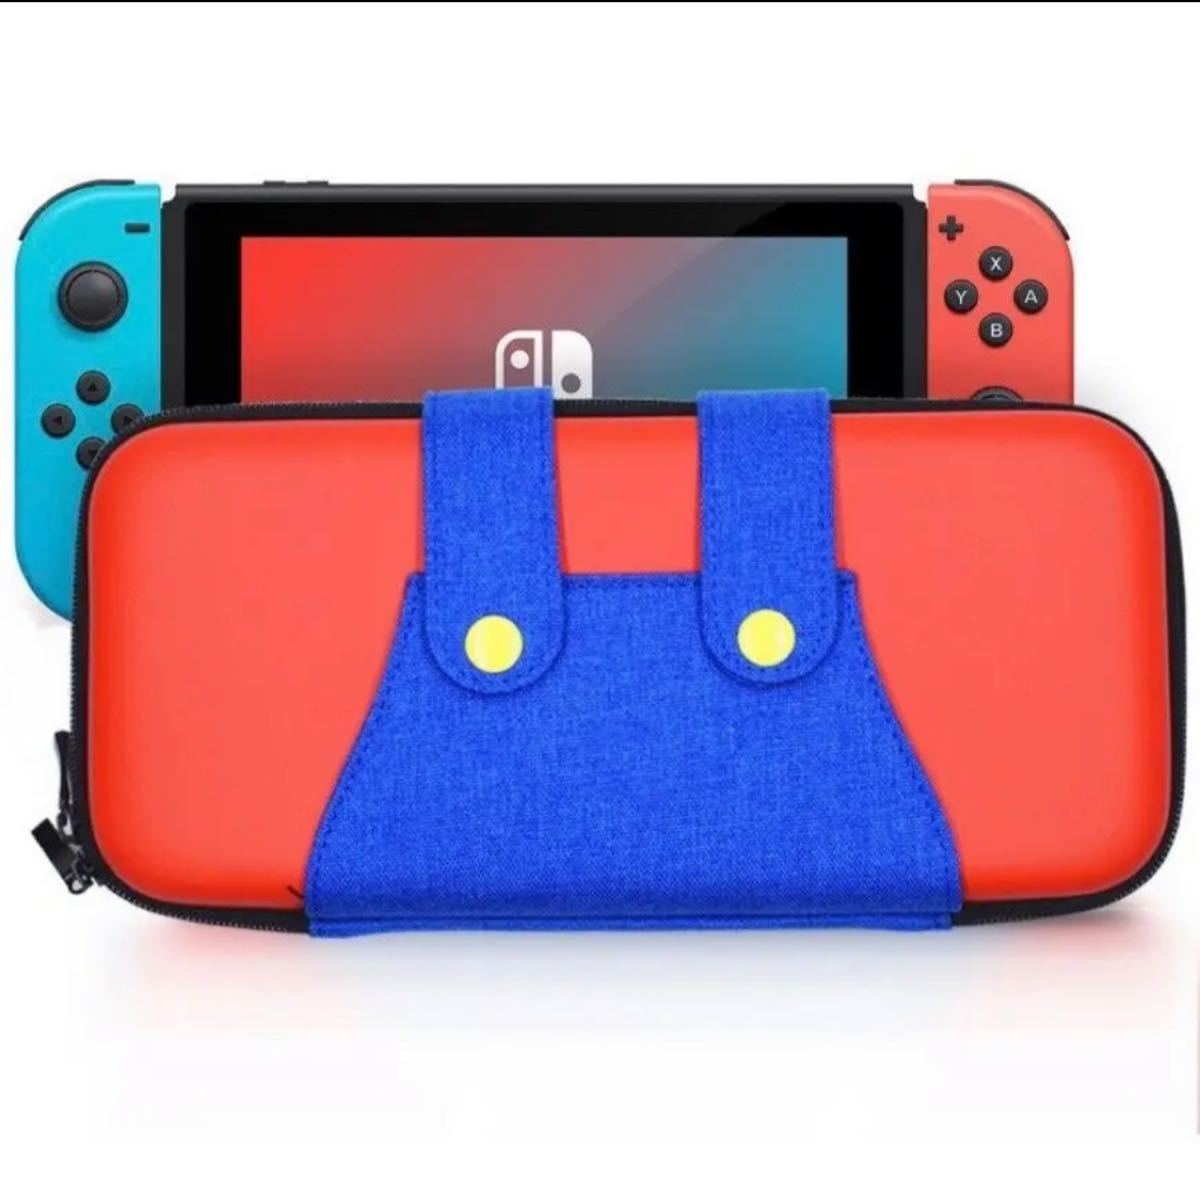 Nintendo Switch / 任天堂スイッチ 専用 マリオ風カバー 赤青